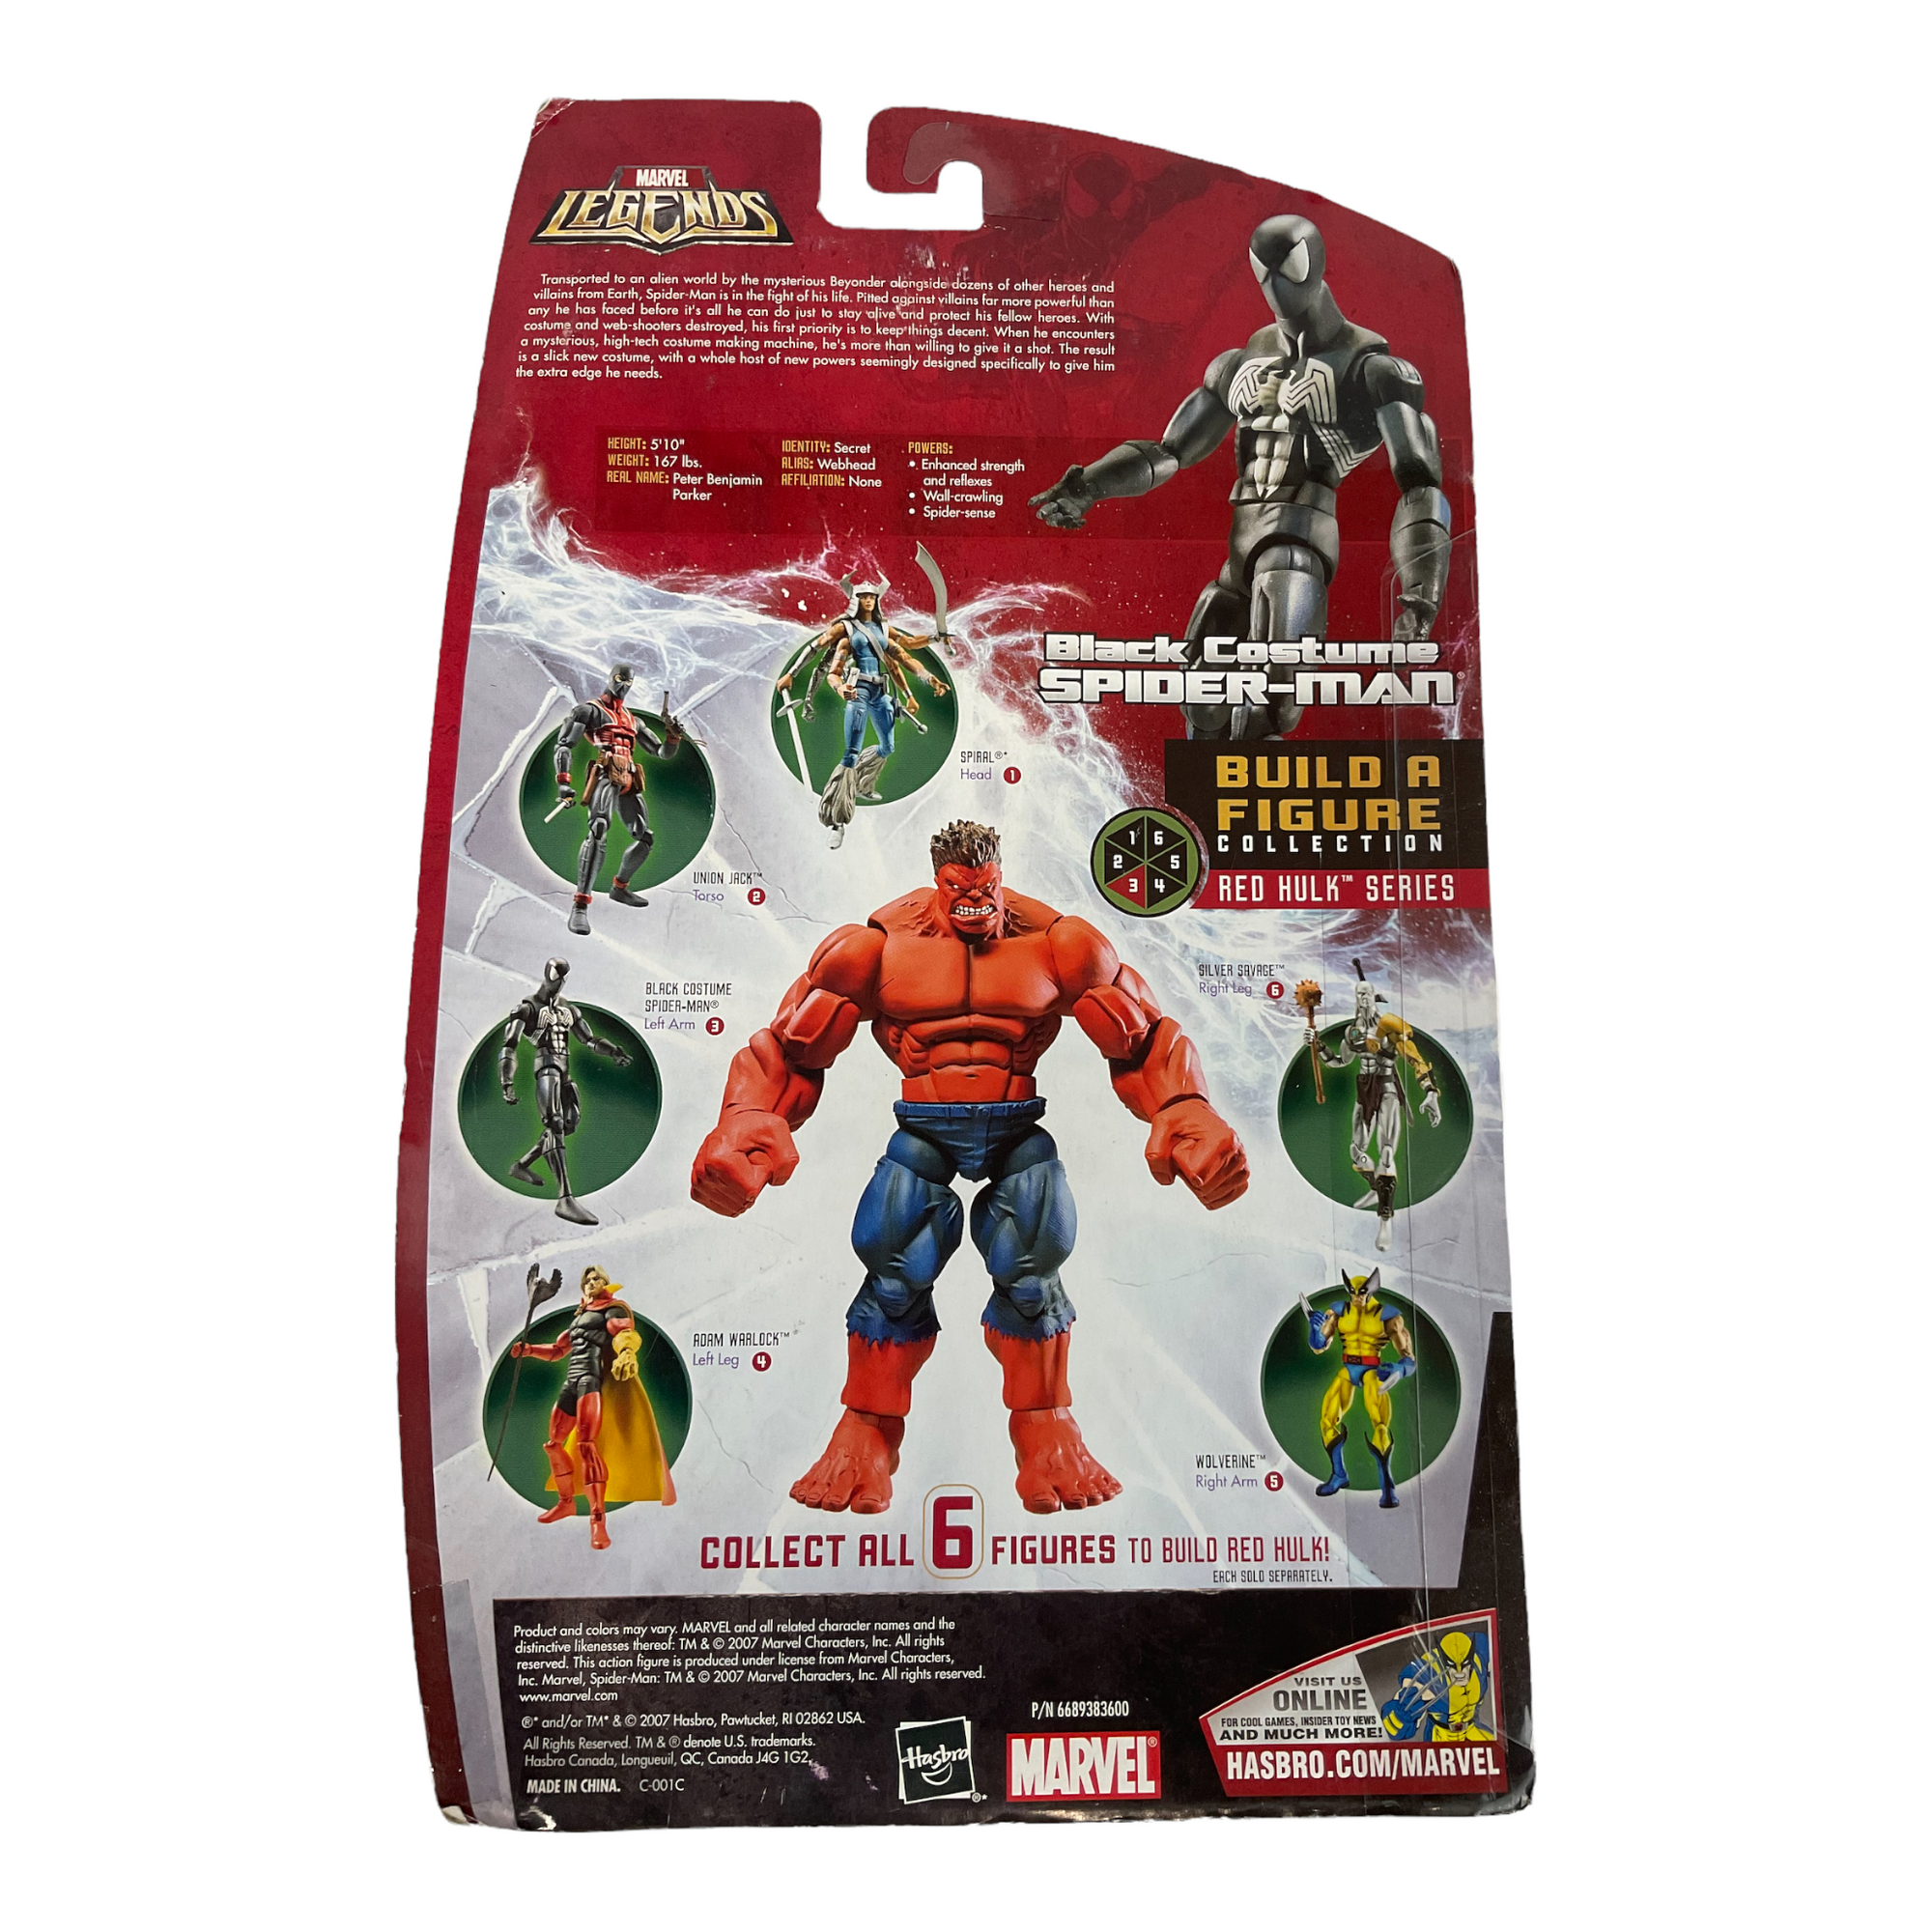 Marvel Legends Red Hulk Build a Figure Black Suit Spider-Man Exclusive